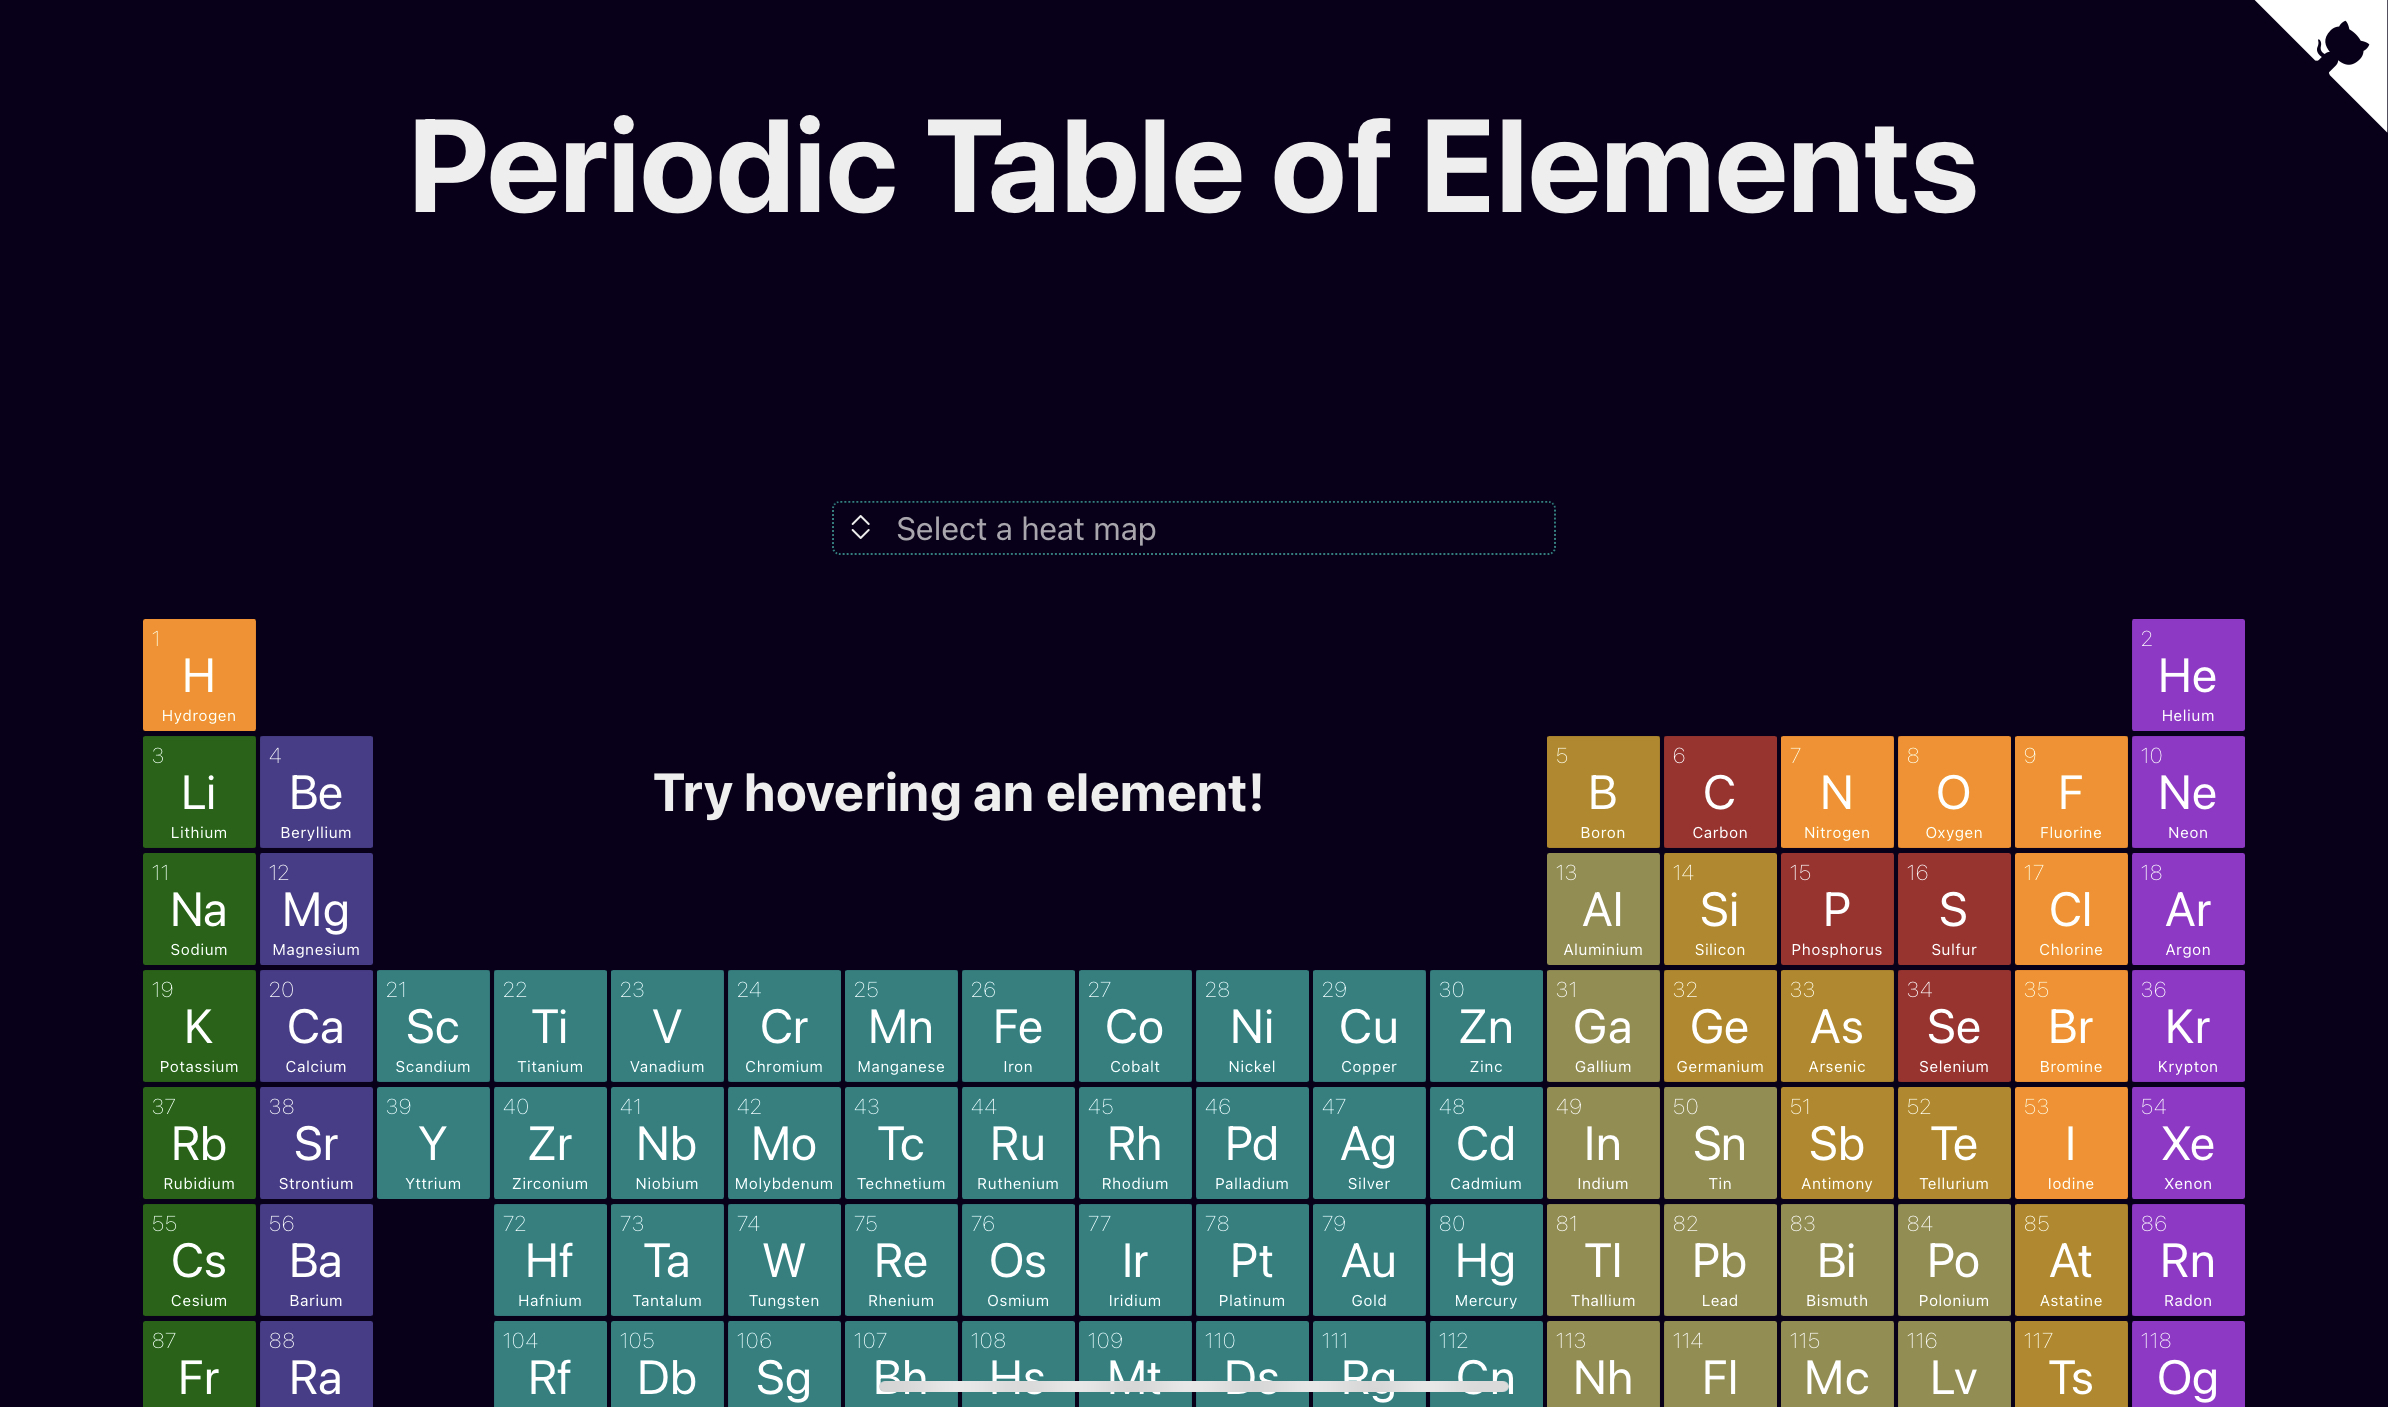 Screenshot of Periodic Table